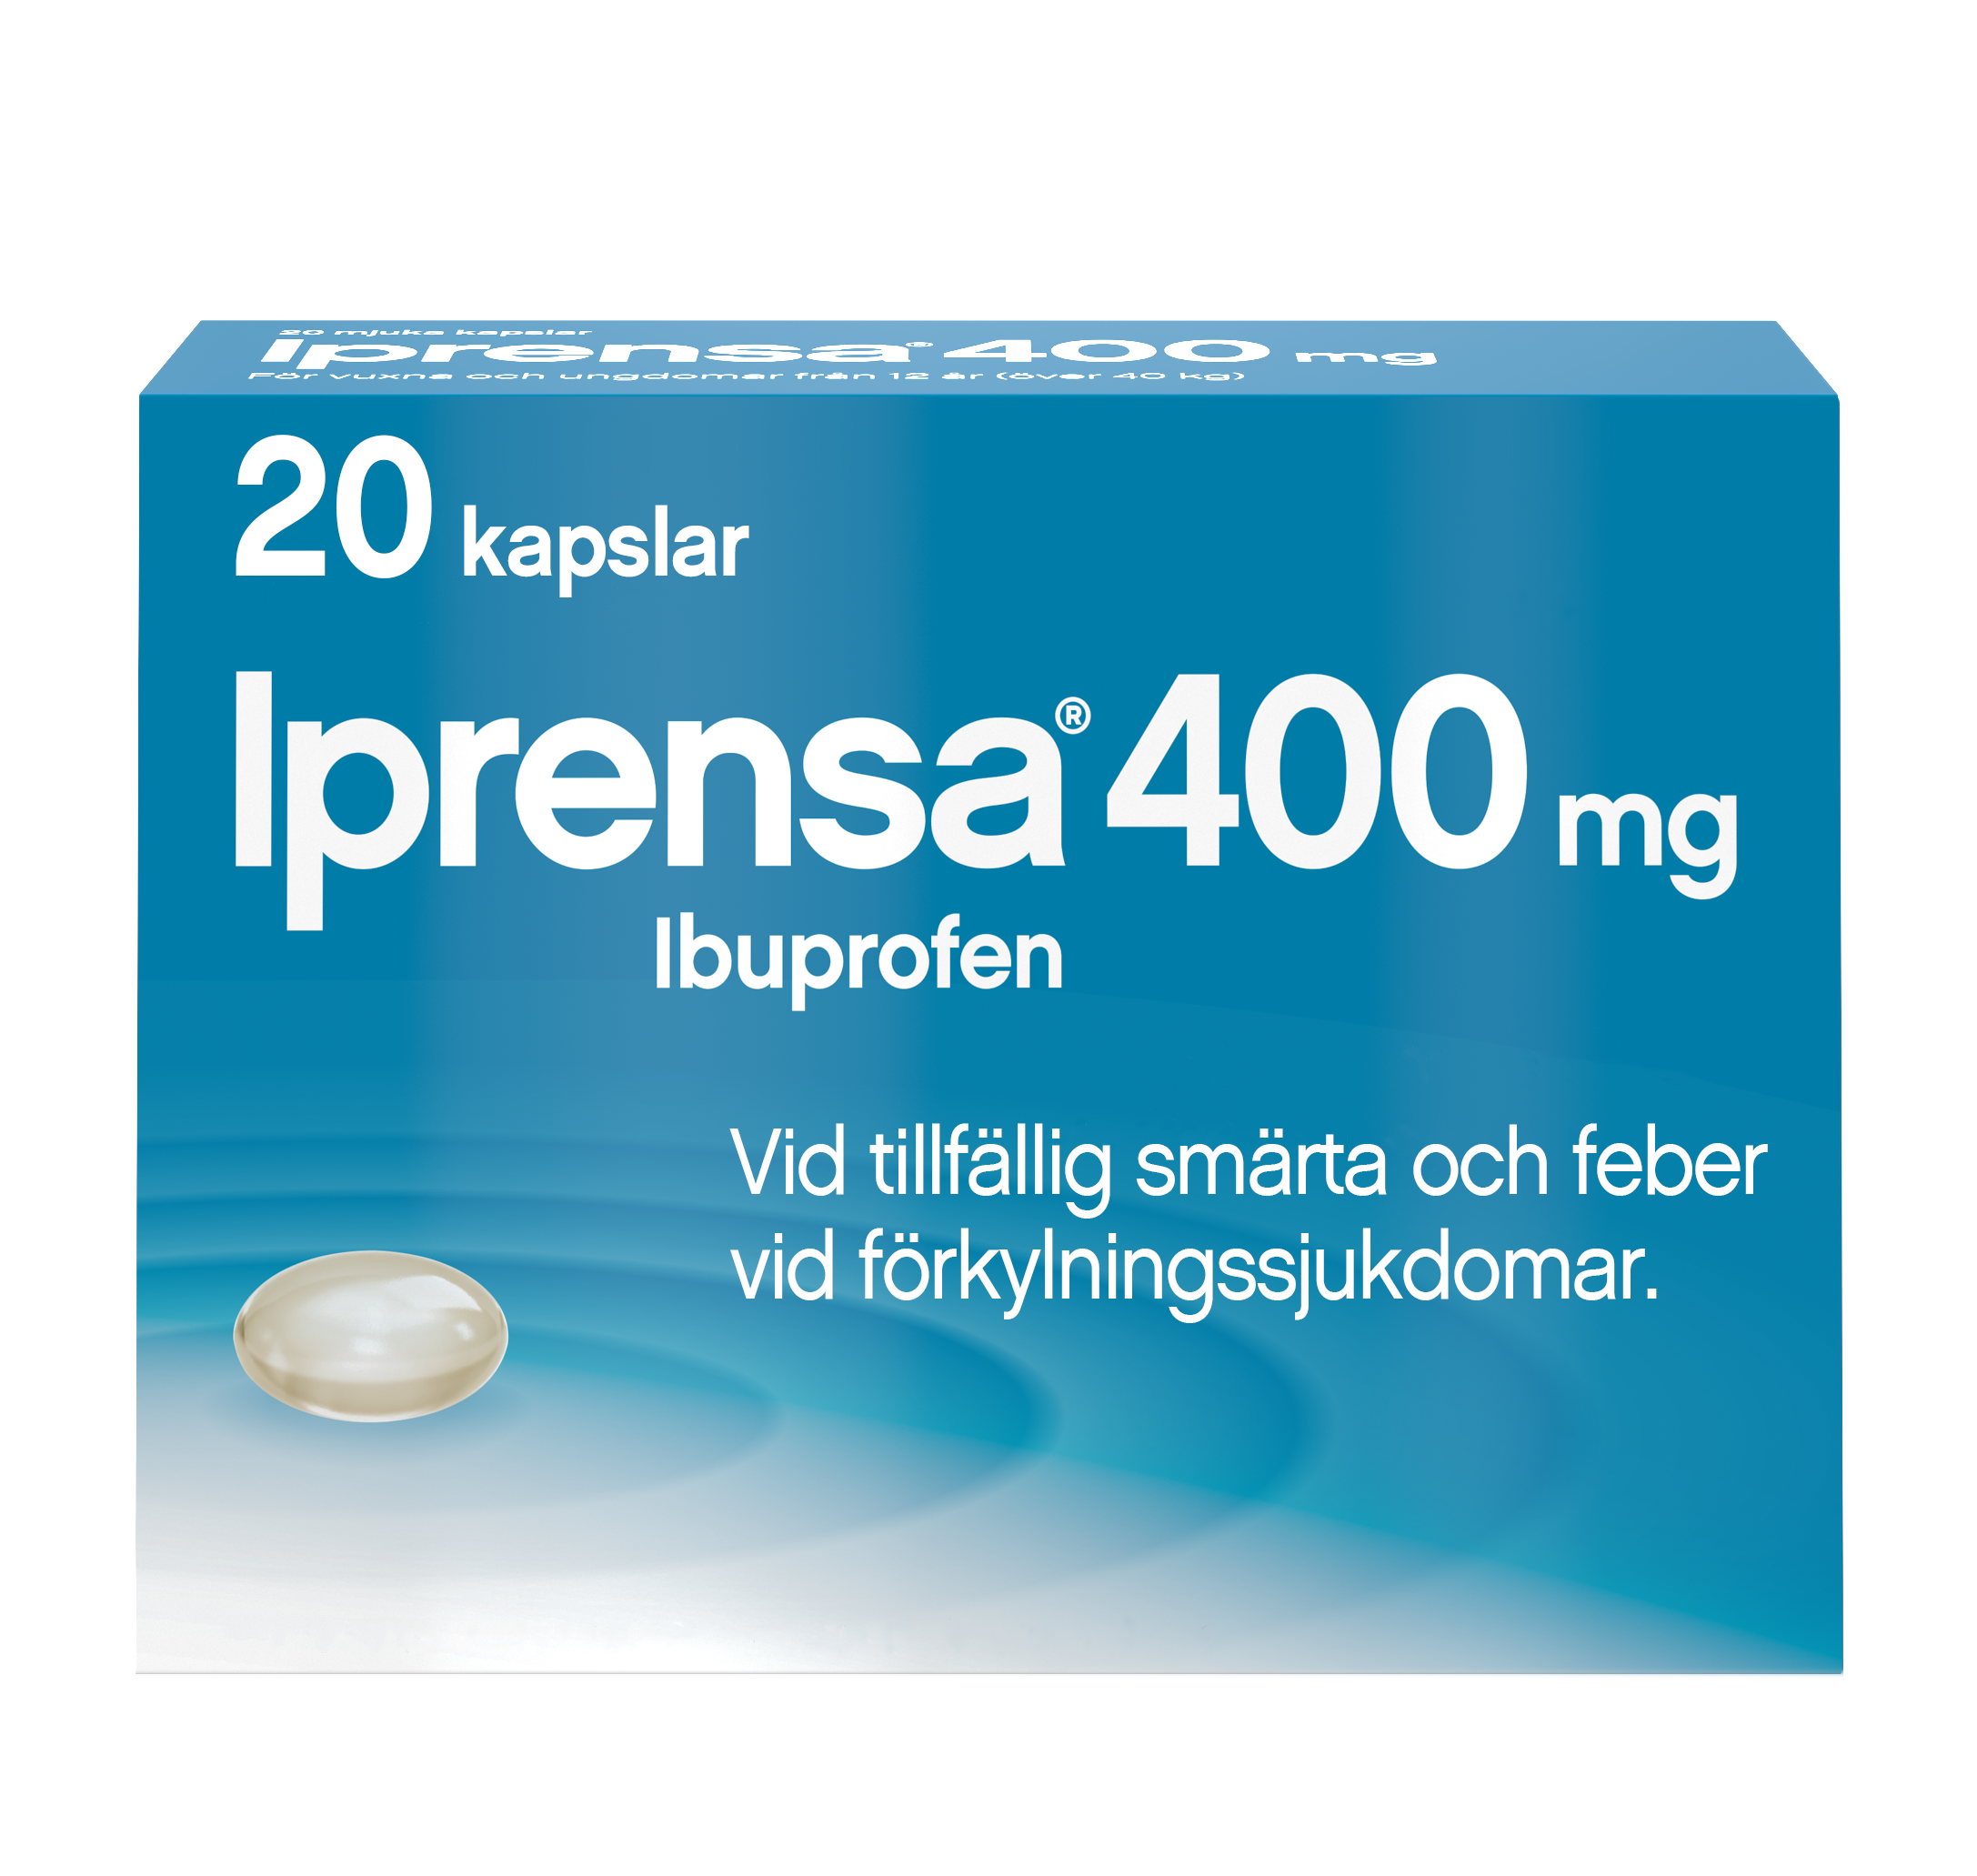 IPRENSATM 400 mg mjuka kapslar